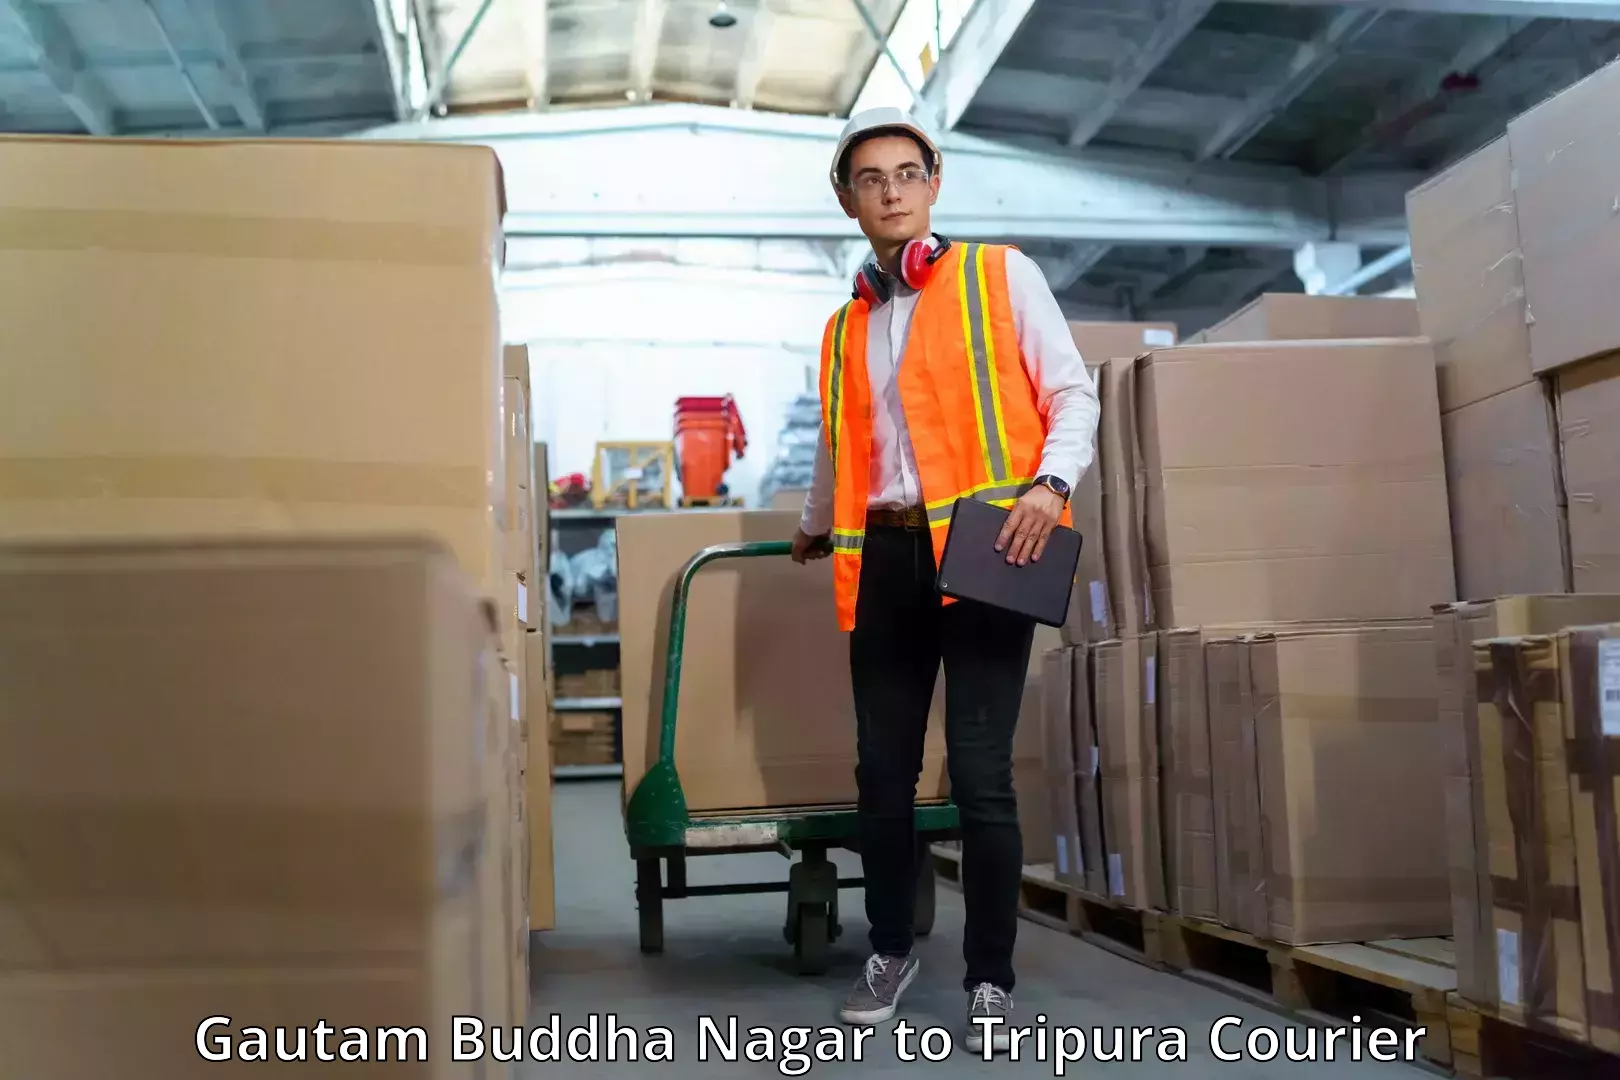 Flexible delivery scheduling Gautam Buddha Nagar to Udaipur Tripura